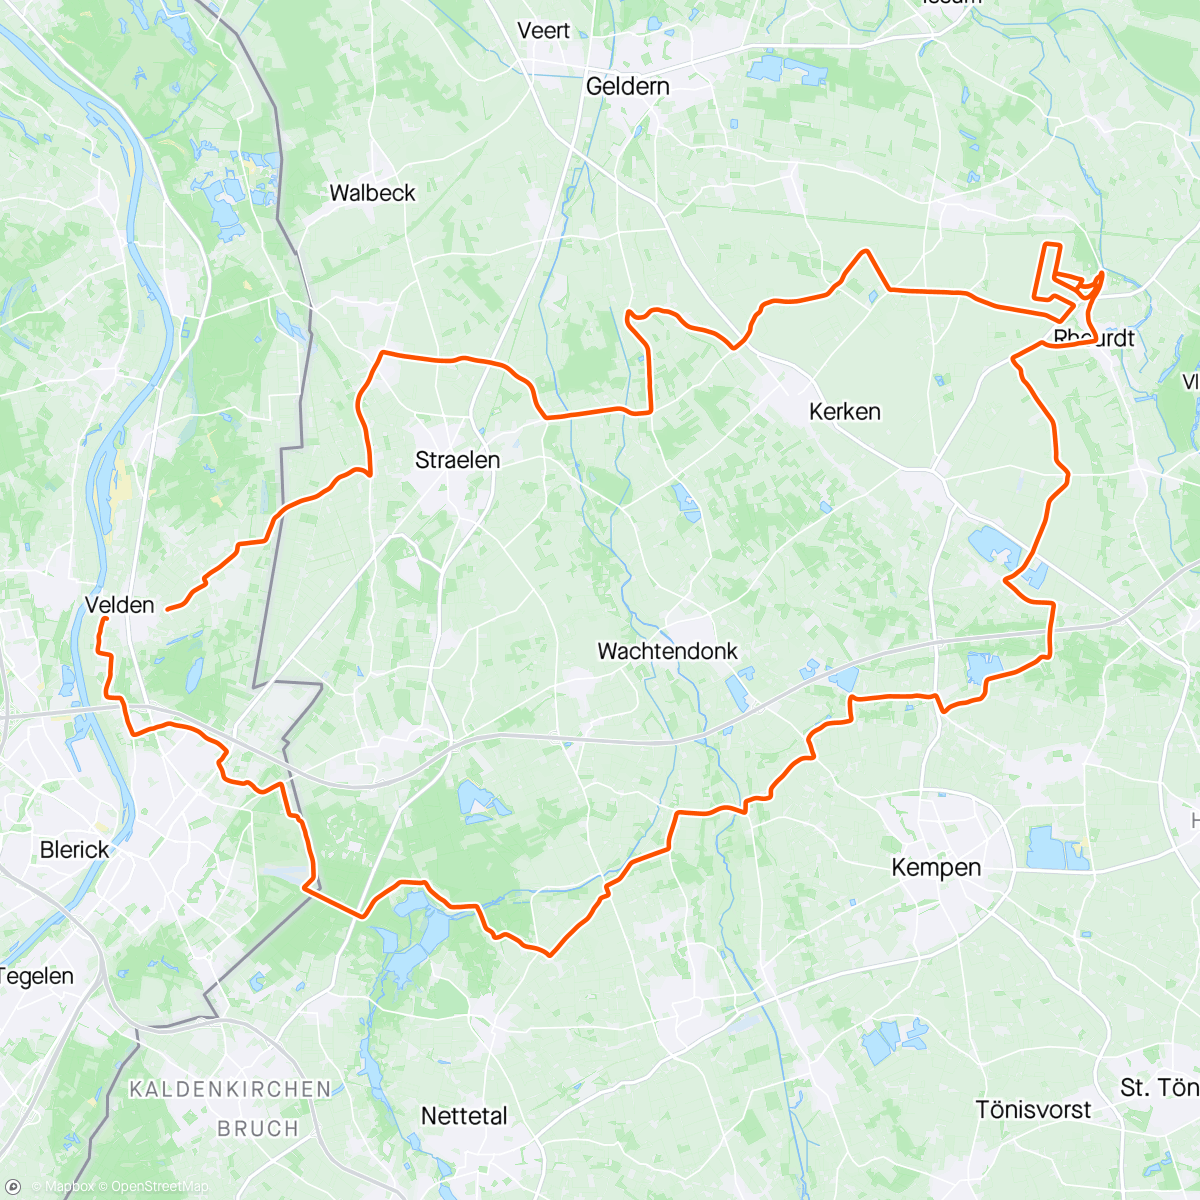 Map of the activity, Rheurdt andersom met Hubke